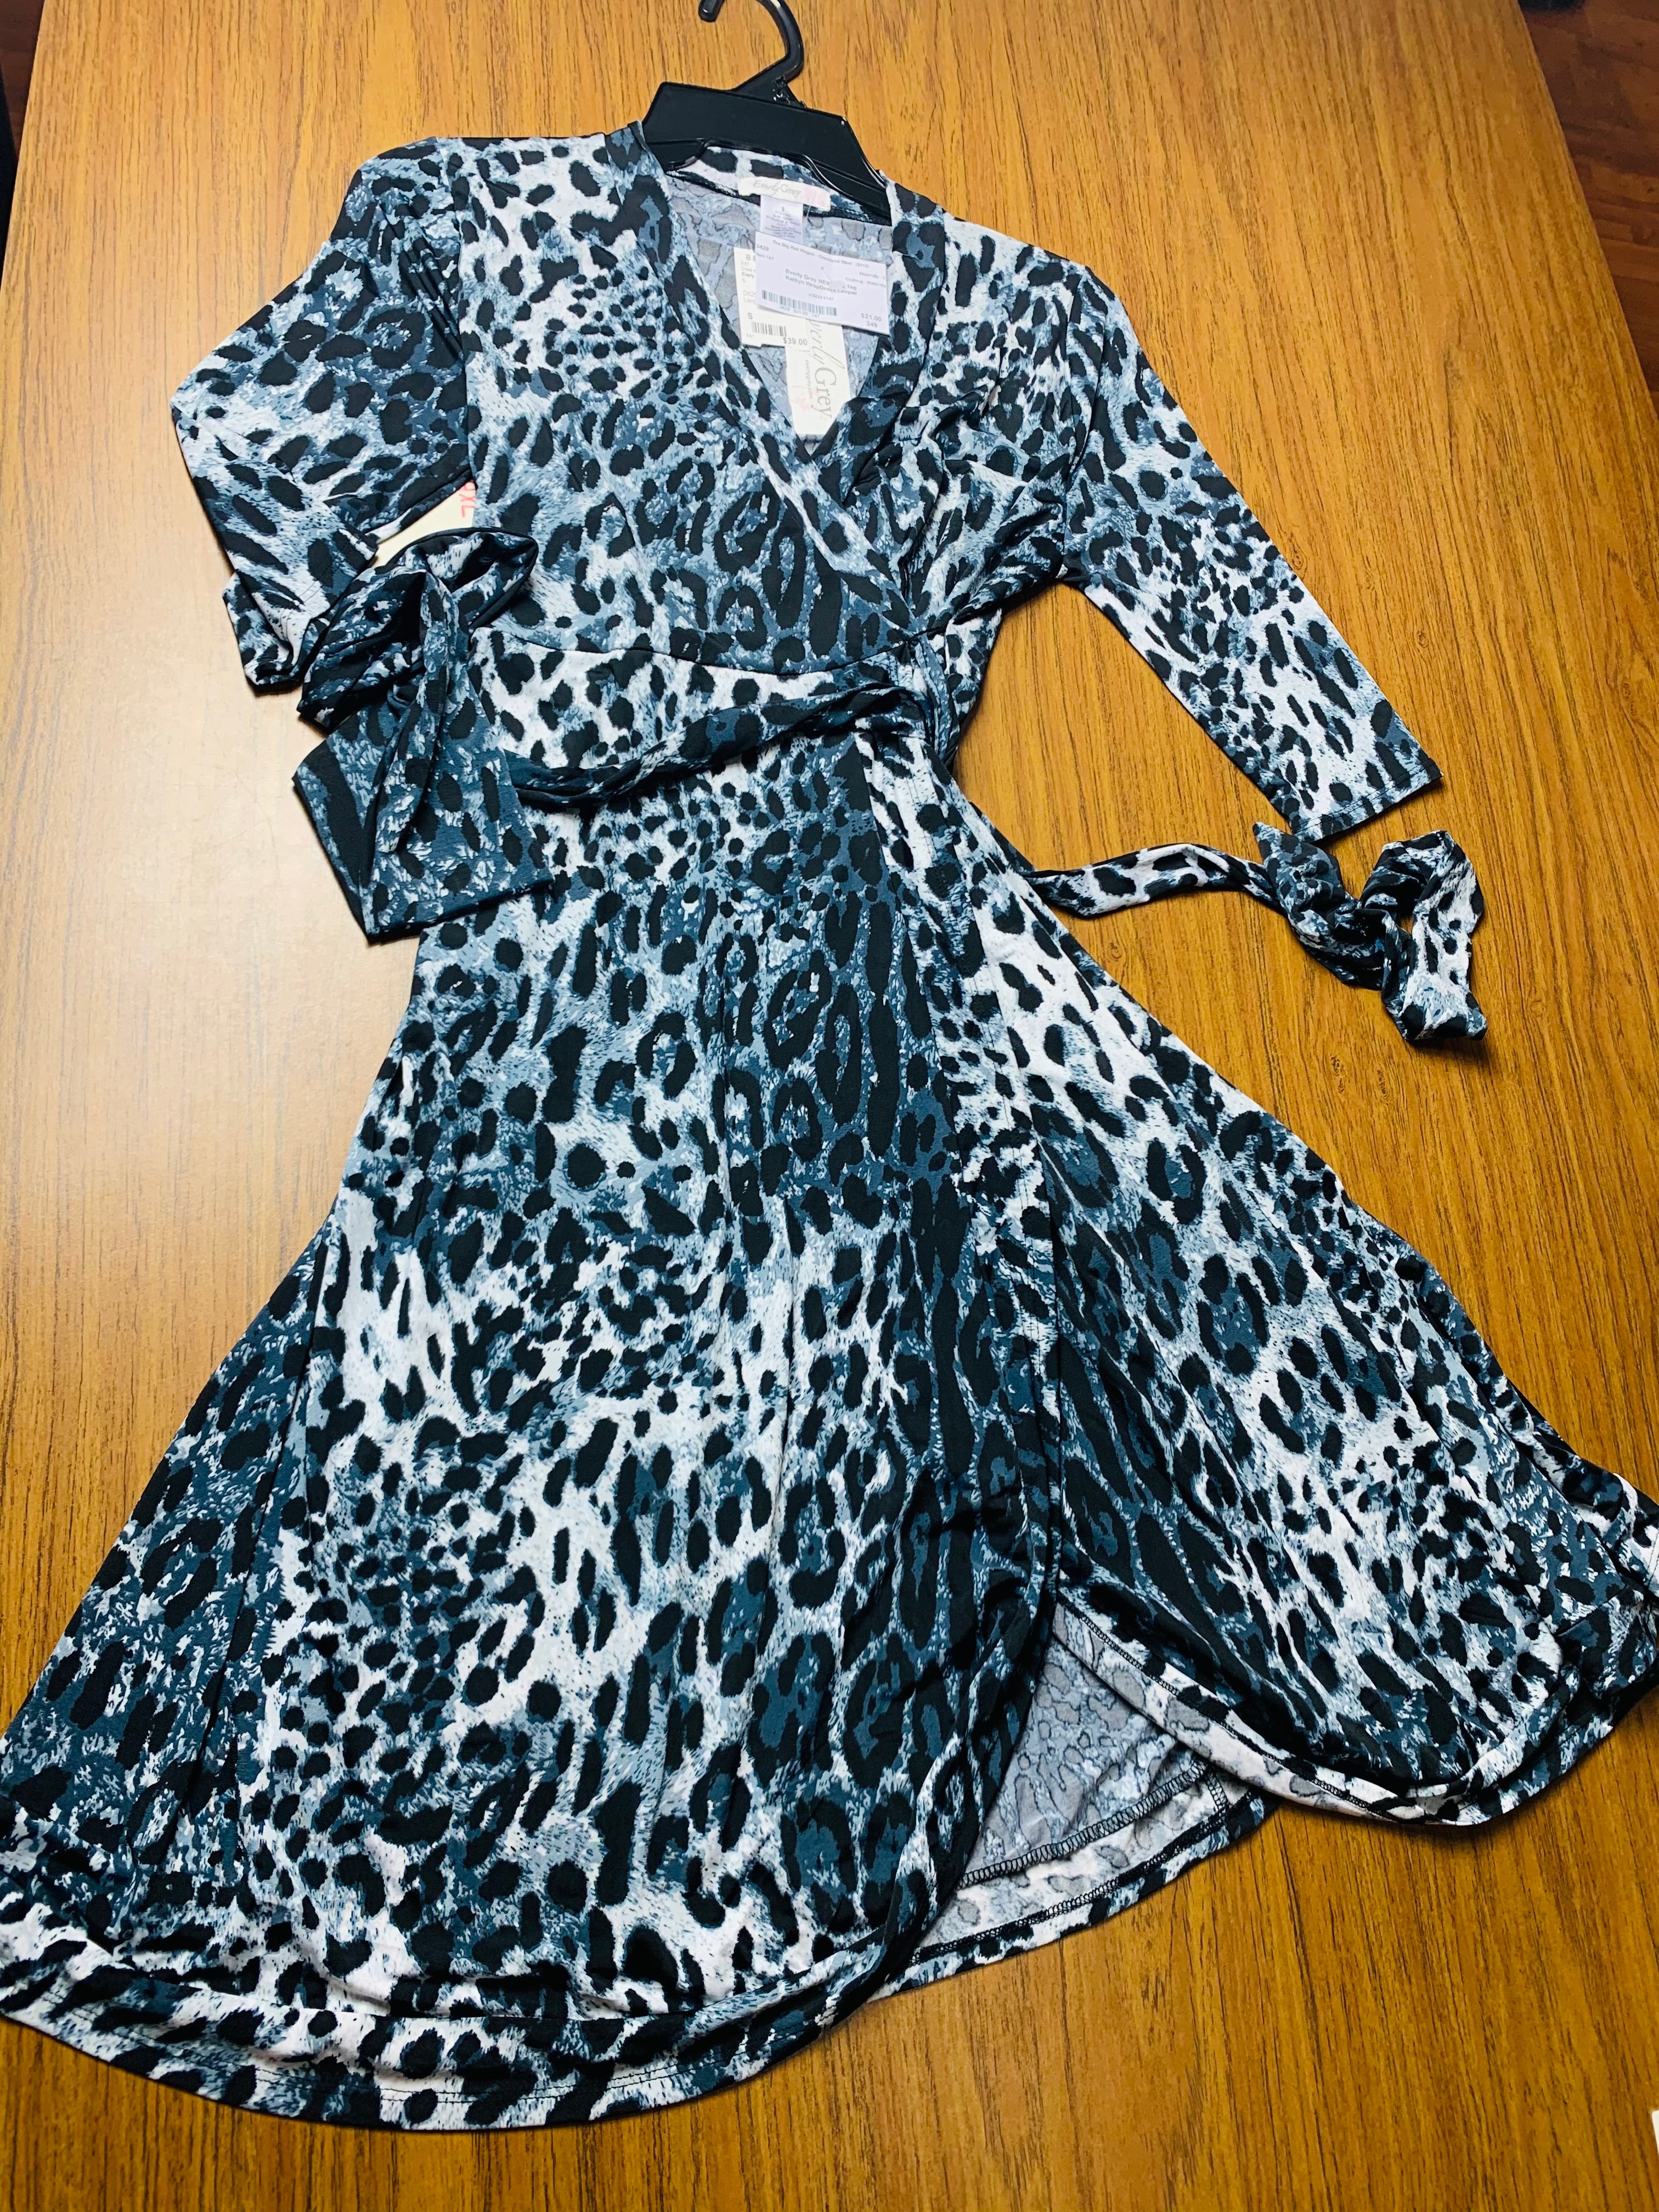 Everly Grey “Kaitlyn” leopard wrap dress